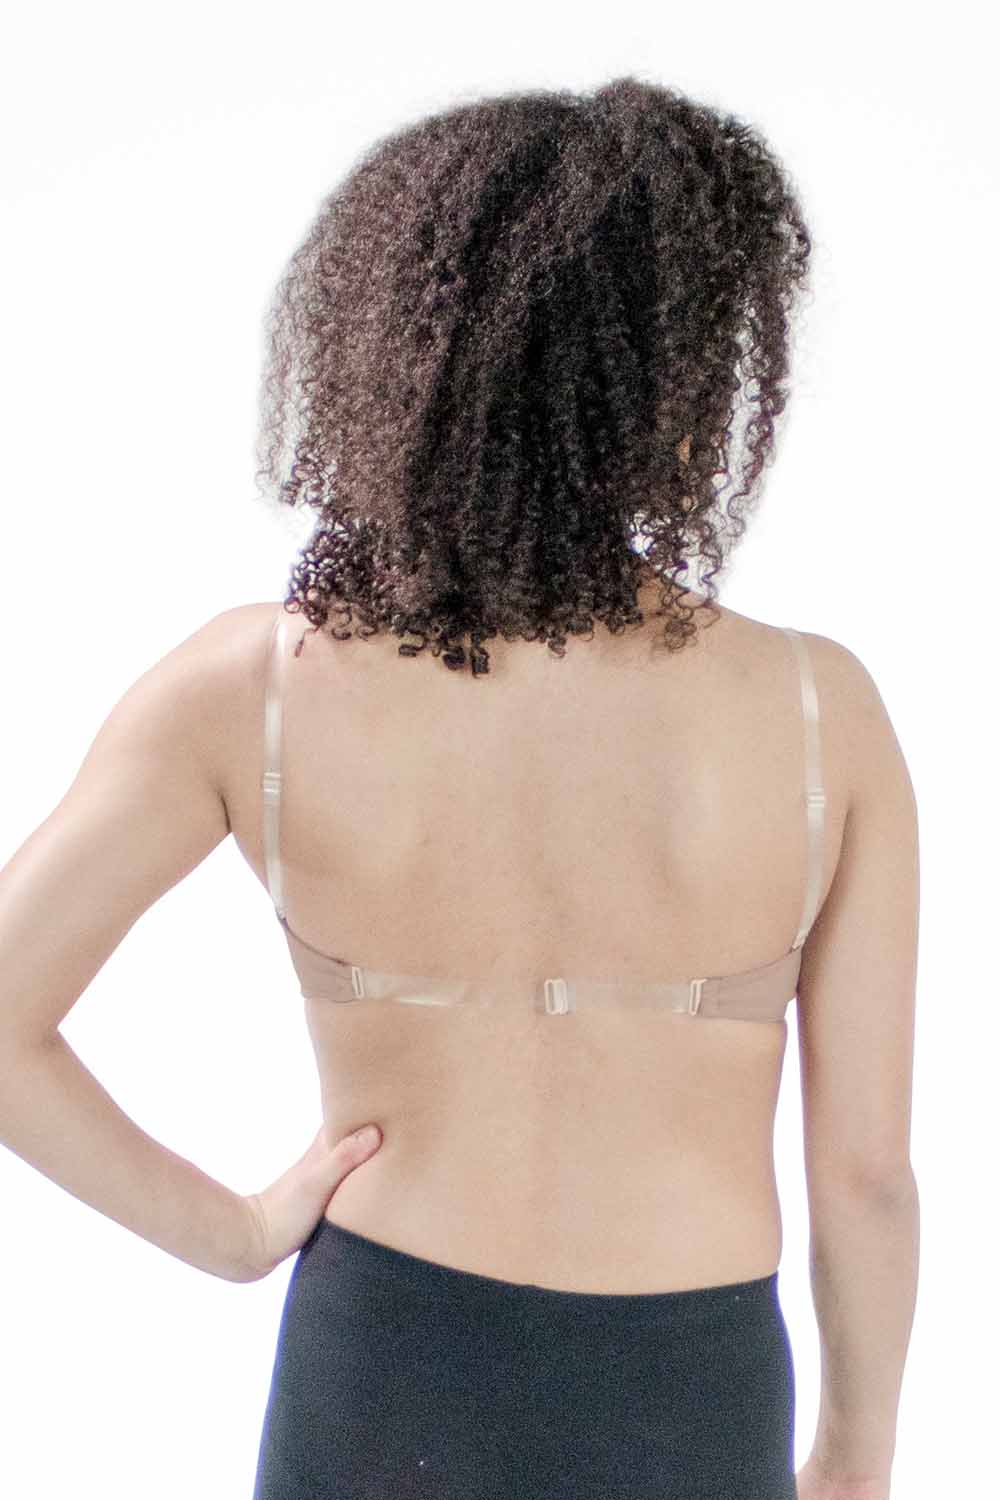 Adult Seamless Microfiber Clear Back Bra, Dancewear